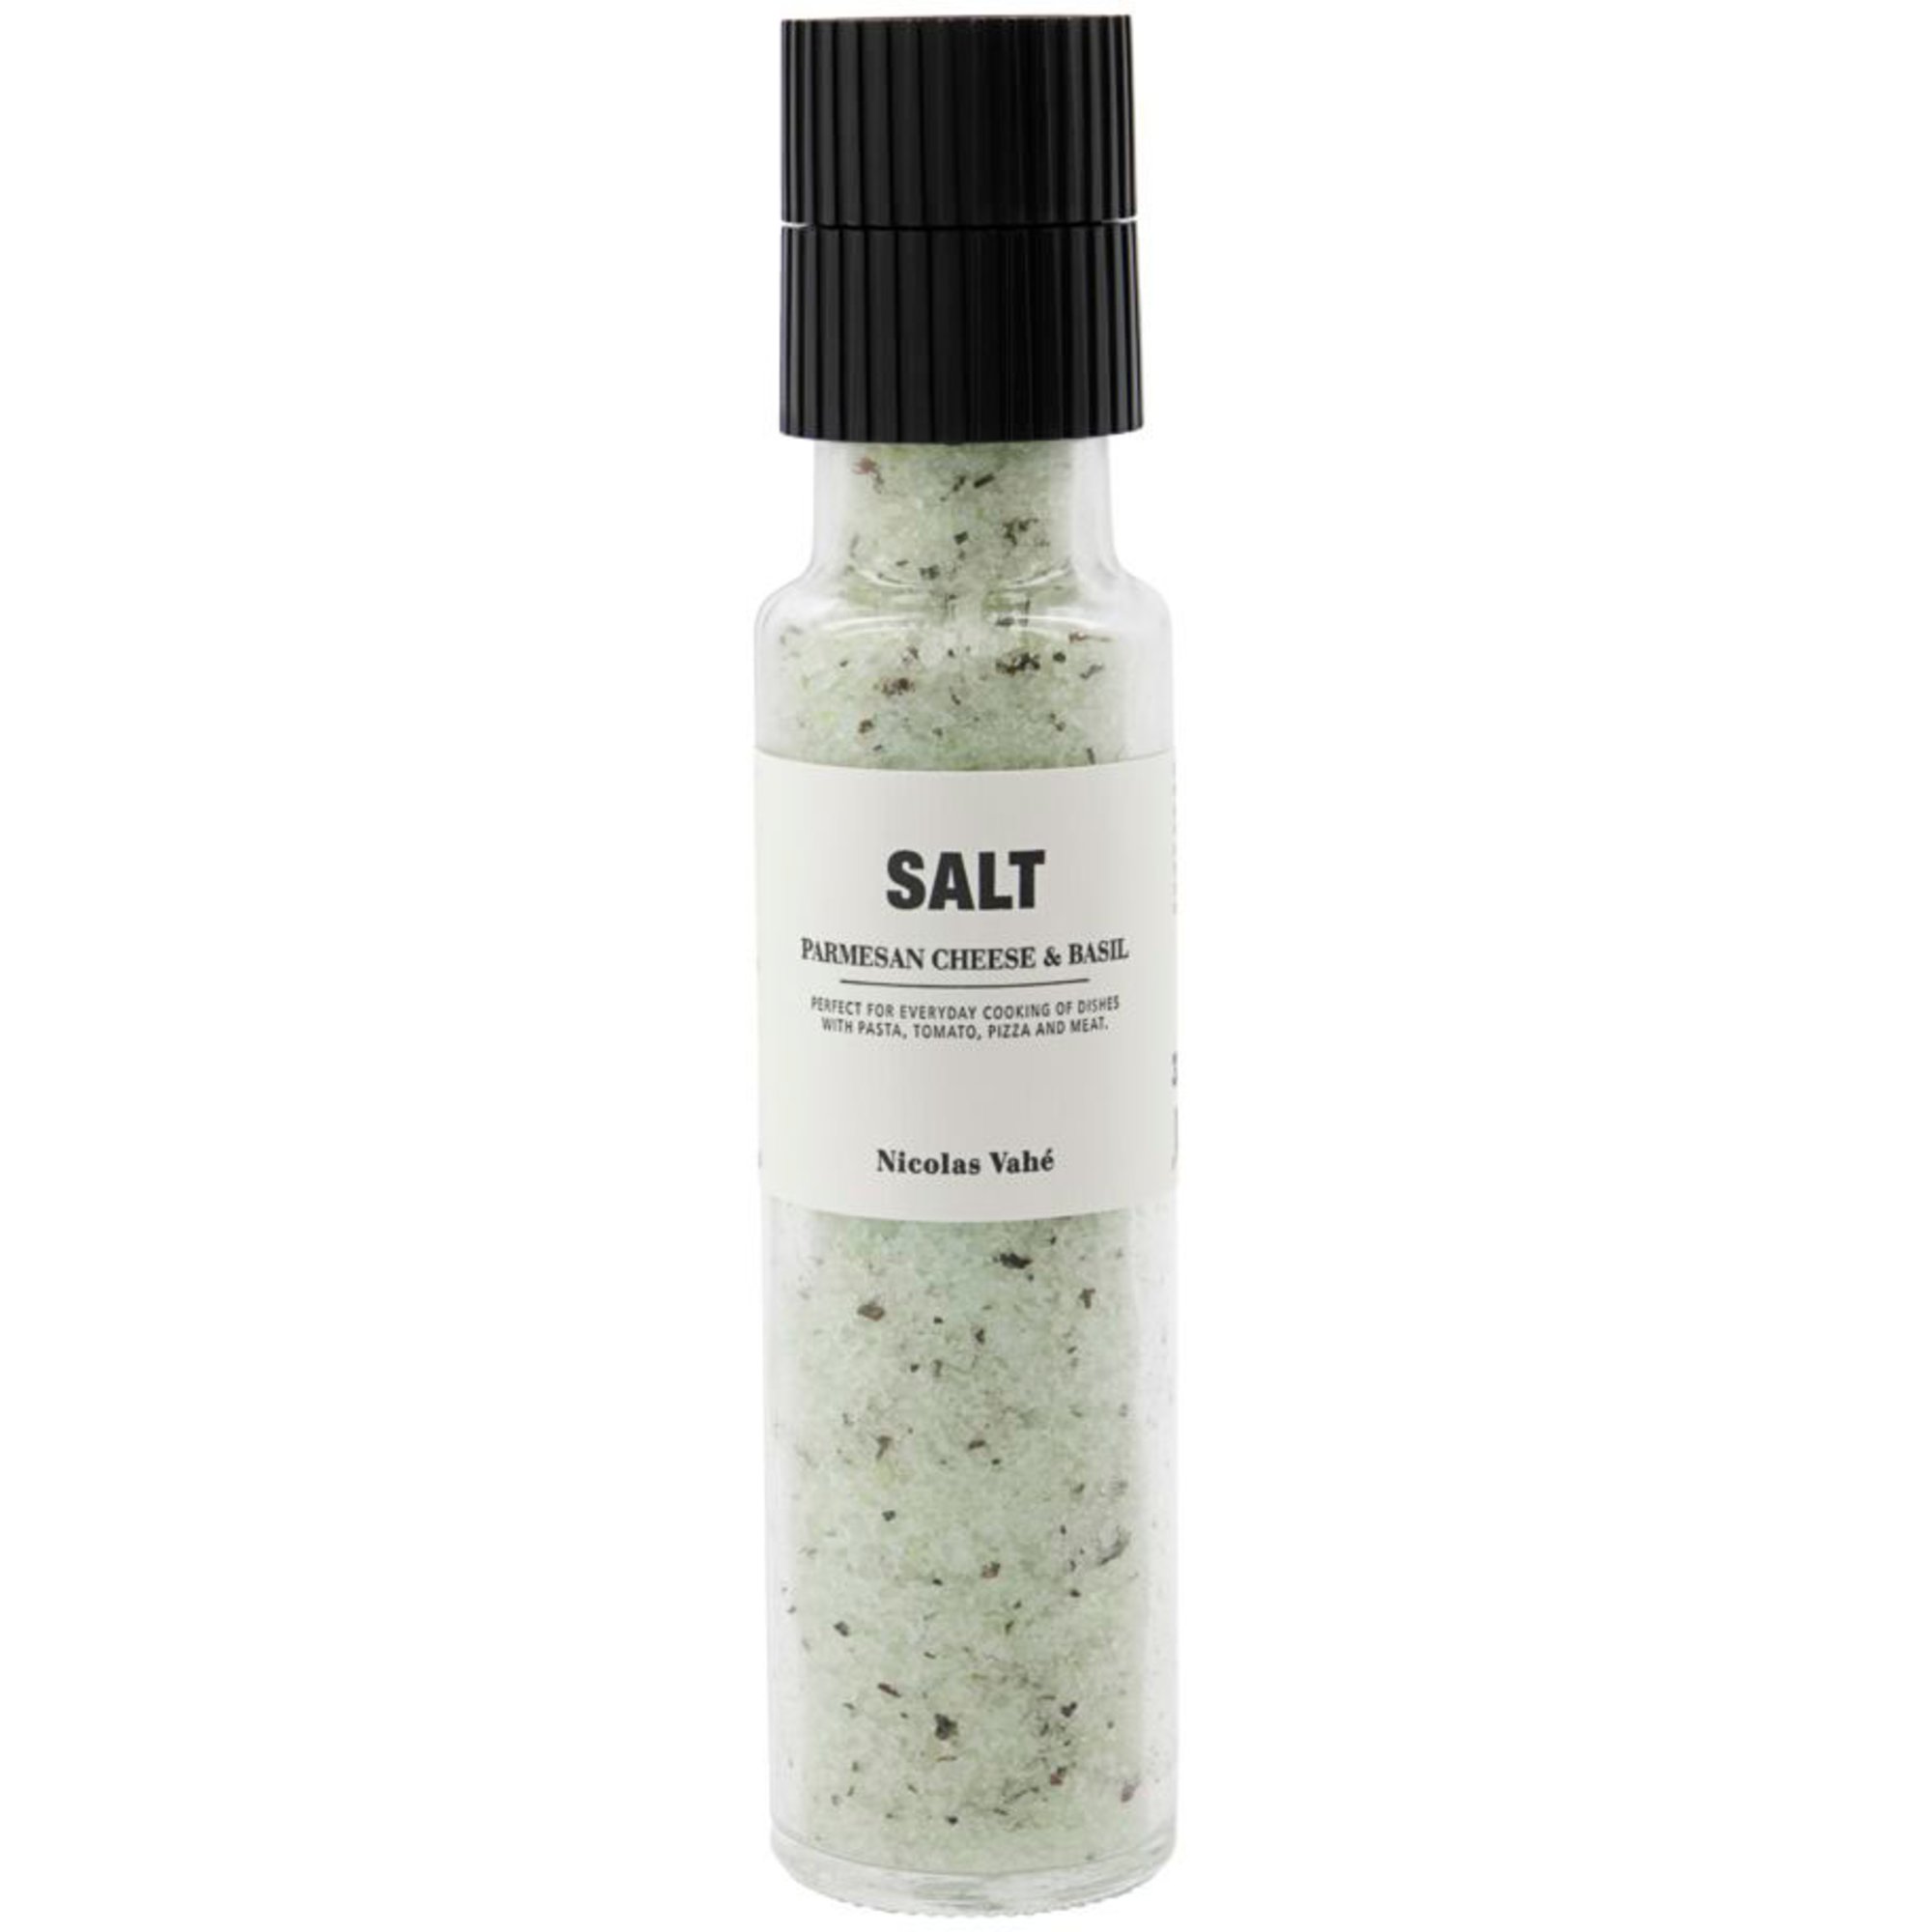 Image of Nicolas Vahé Salt Parmesan & Basil 320 g